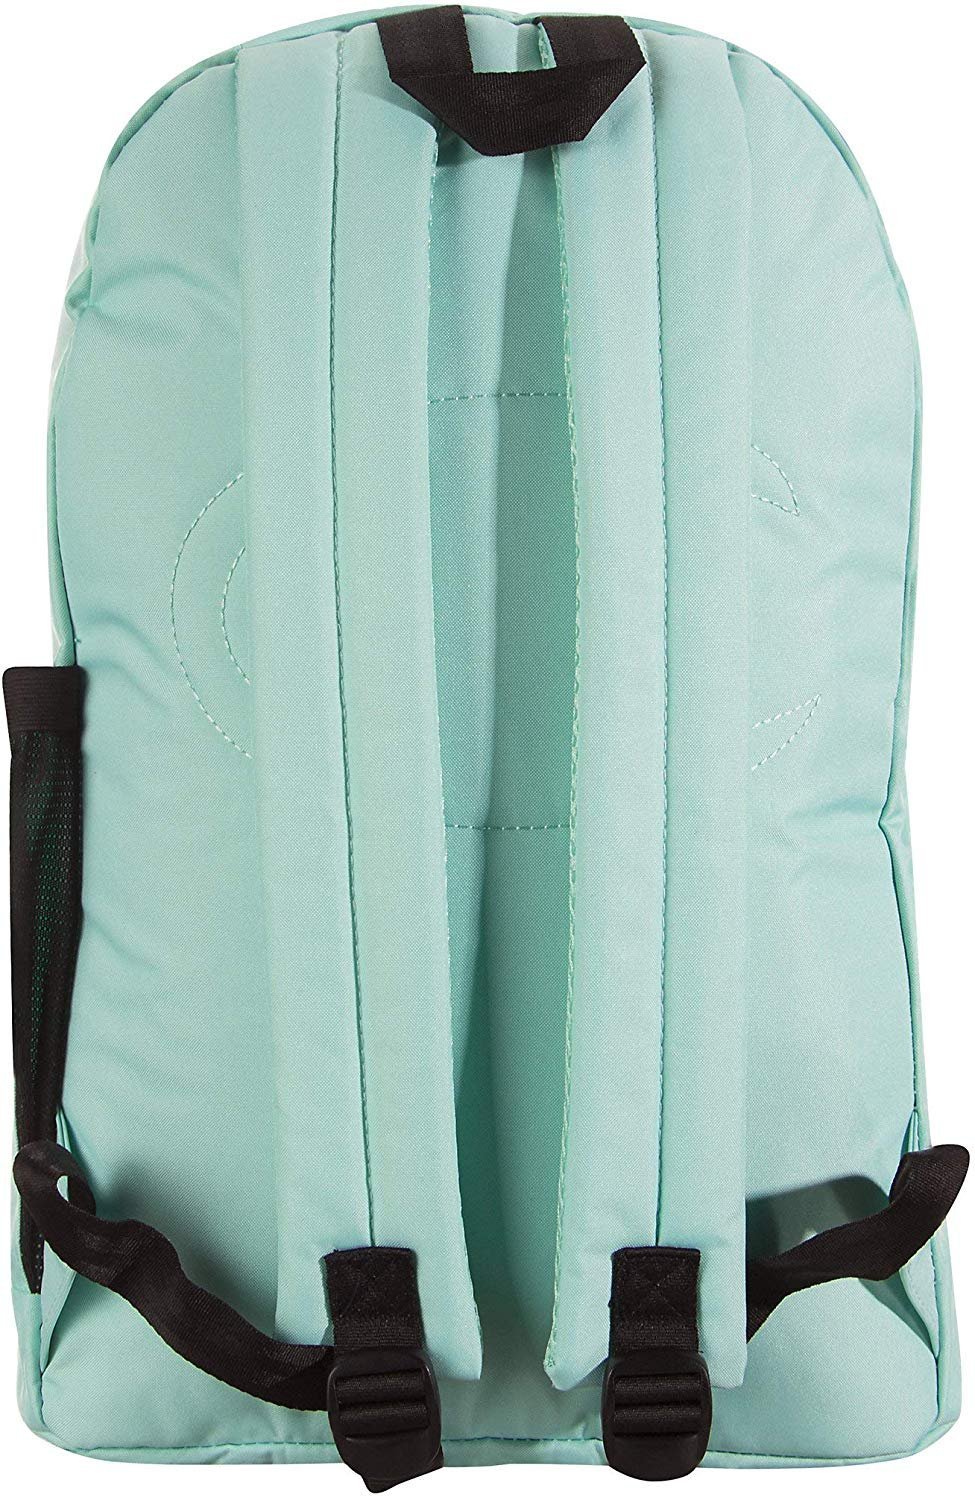 Supercize 2.0 Backpack Light Pastel Green